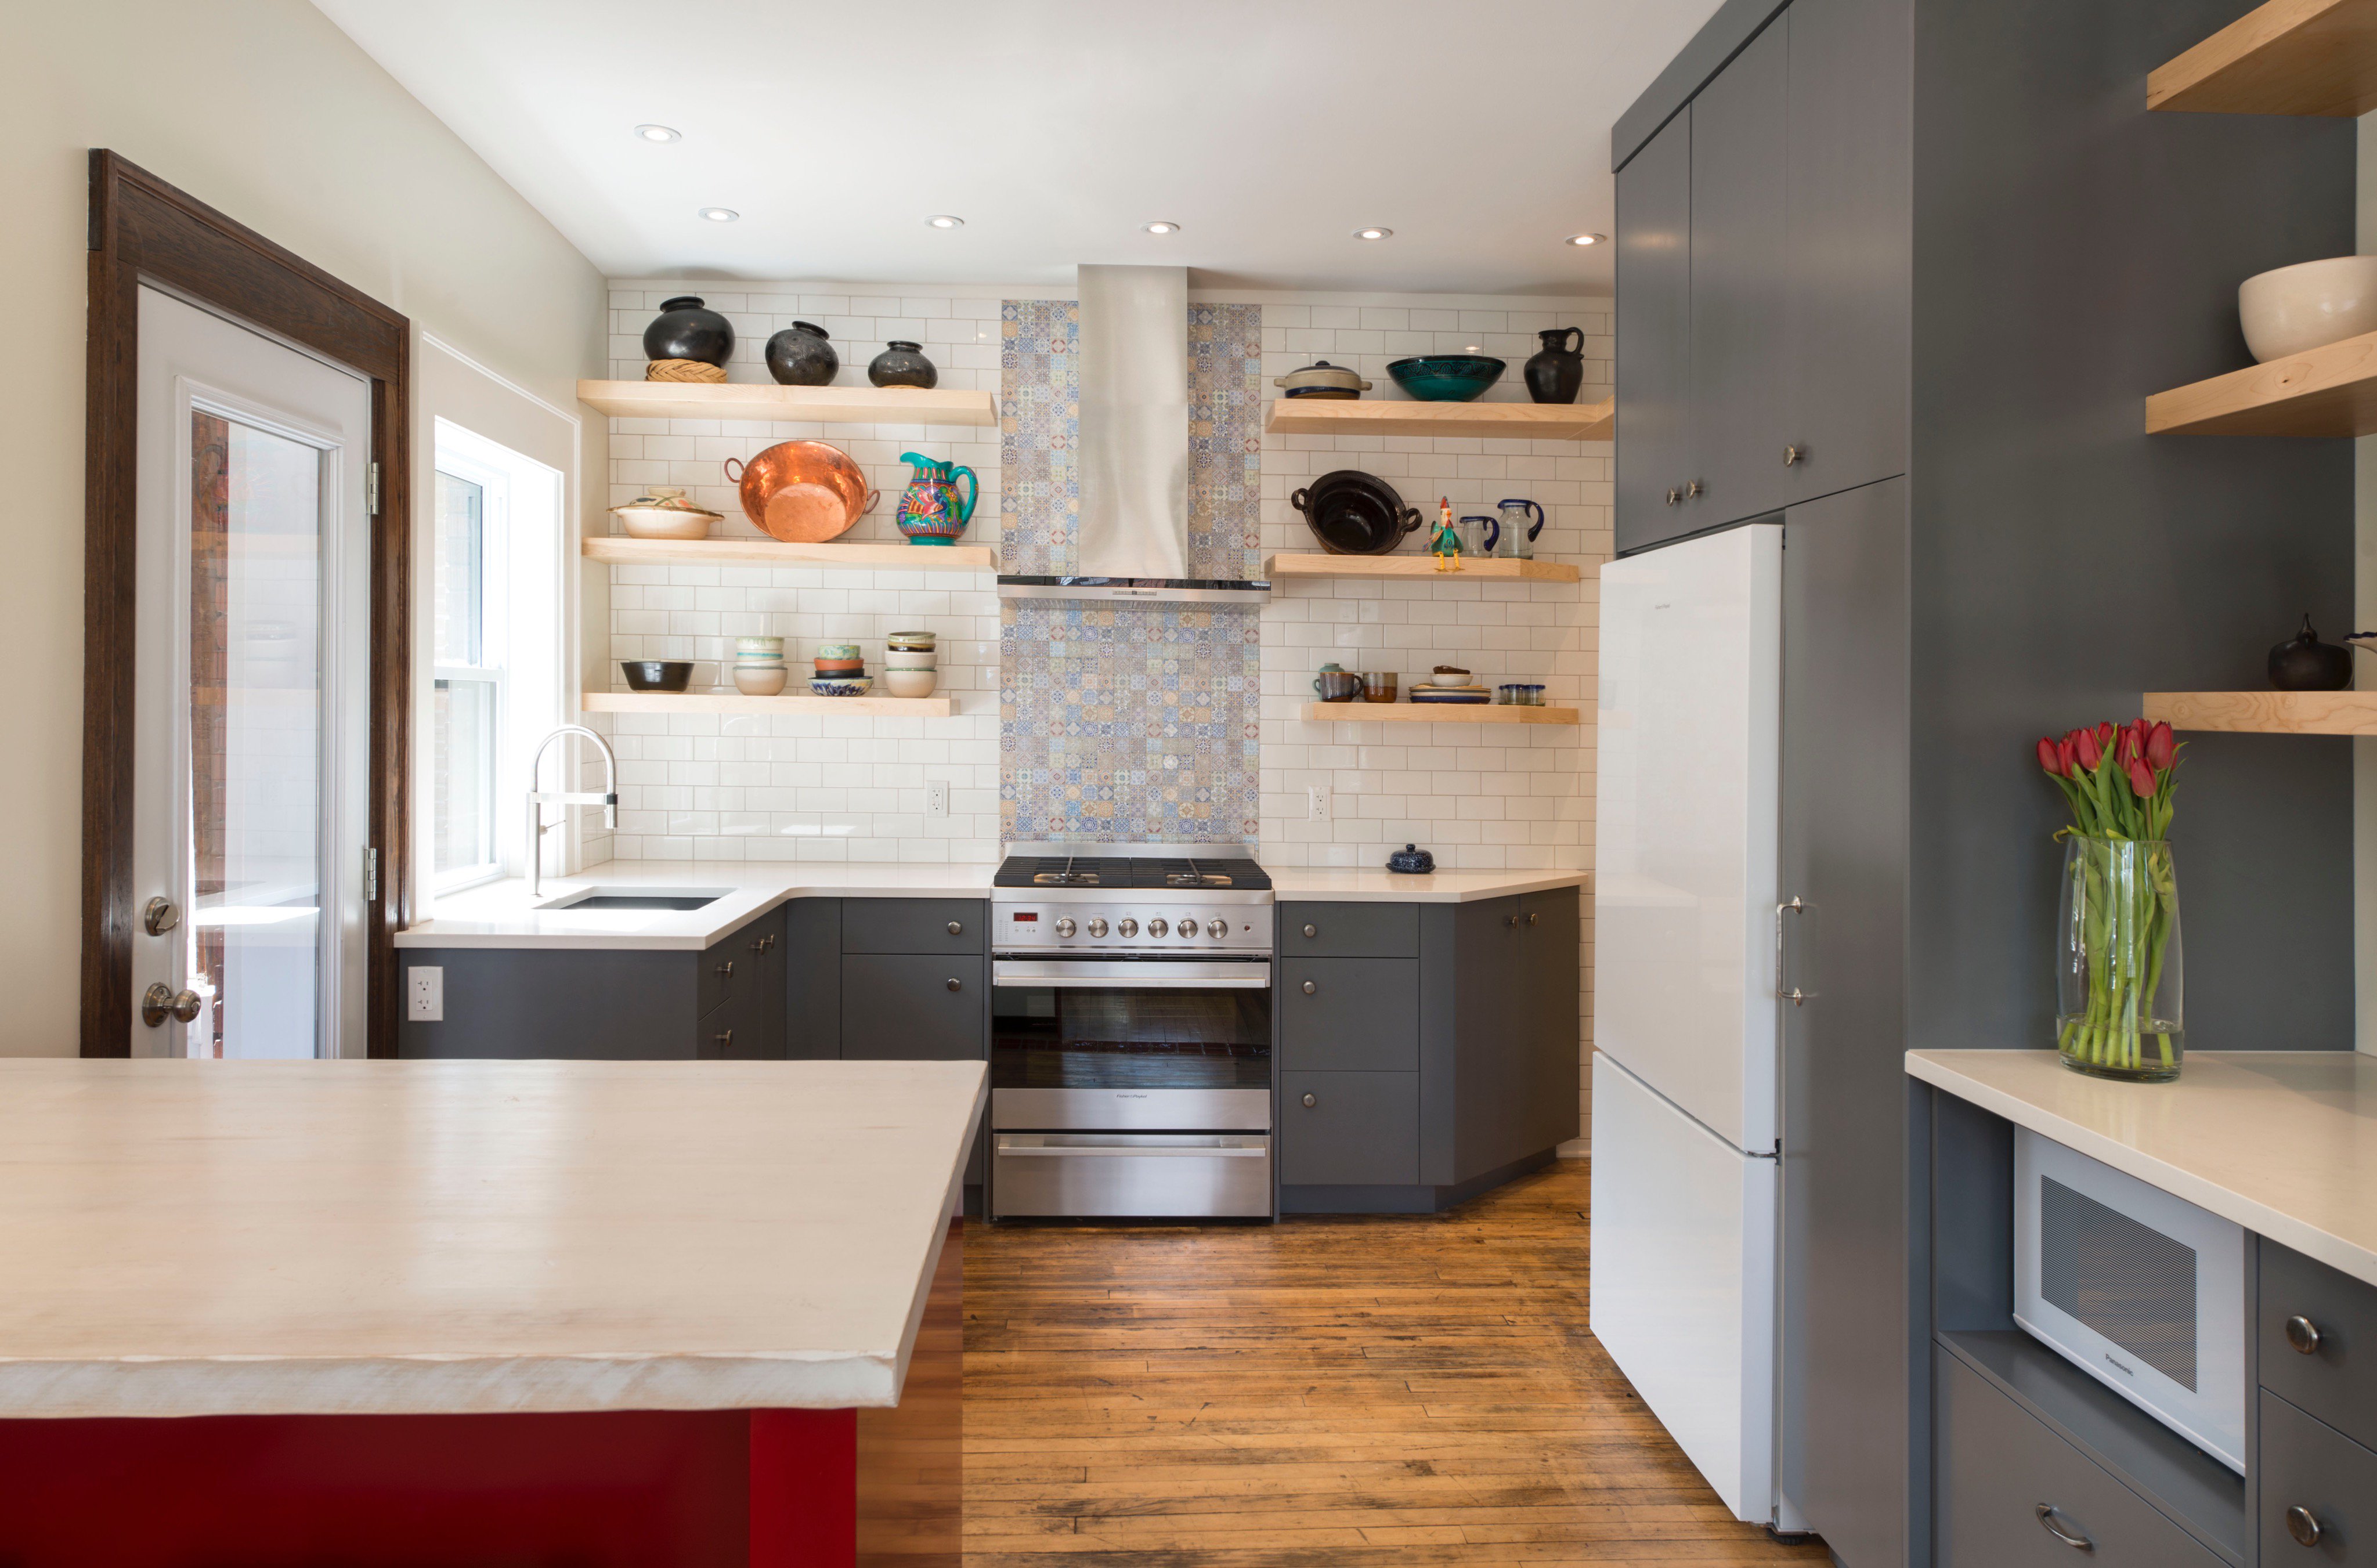 27 Small Kitchen Ideas to Inspire Your Next Reno - Bob Vila